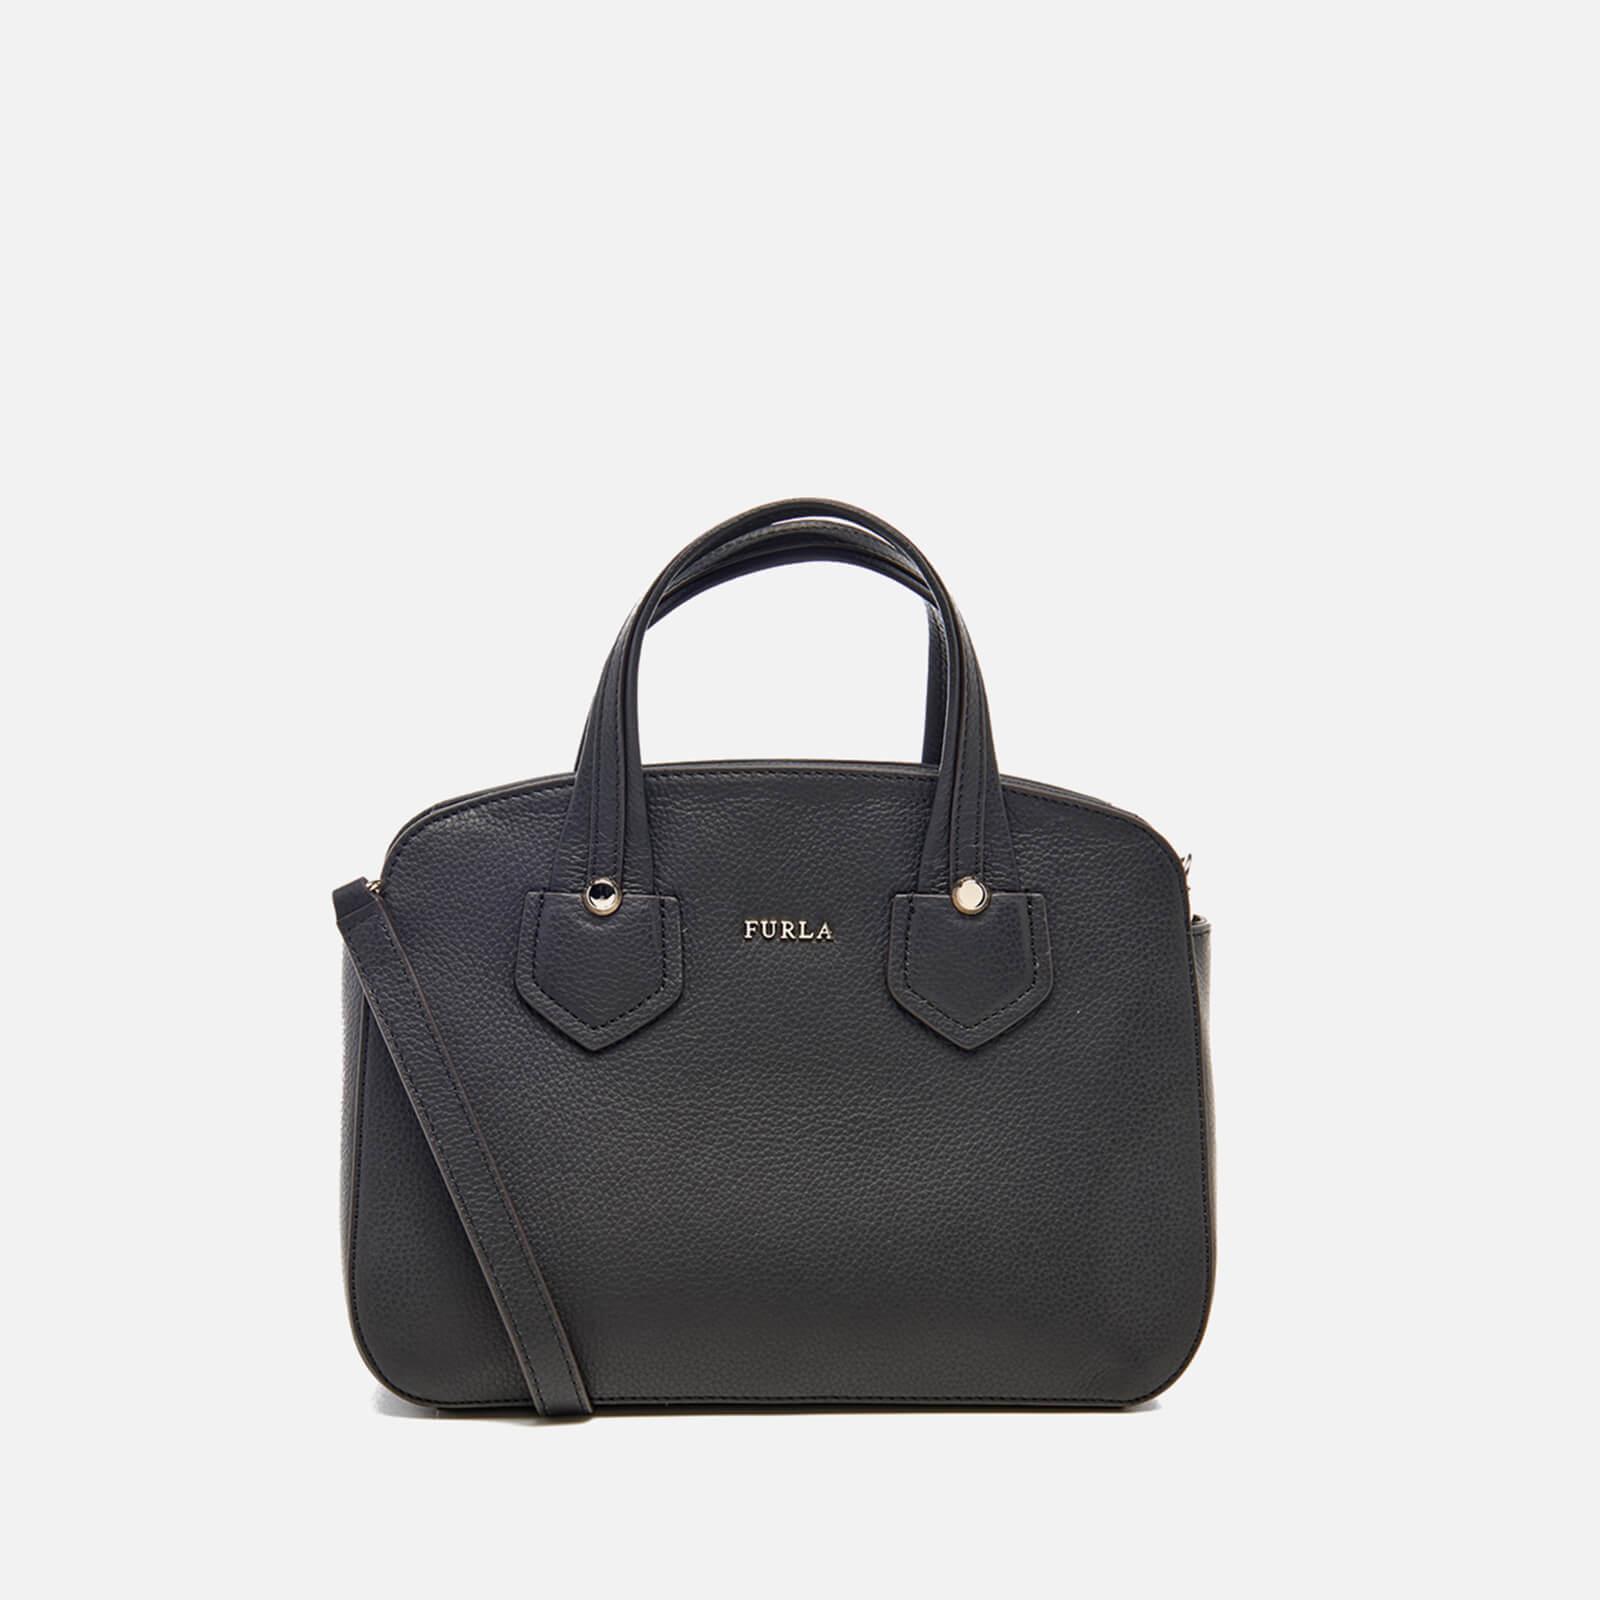 Lyst - Furla Giada Small Tote Bag in Black